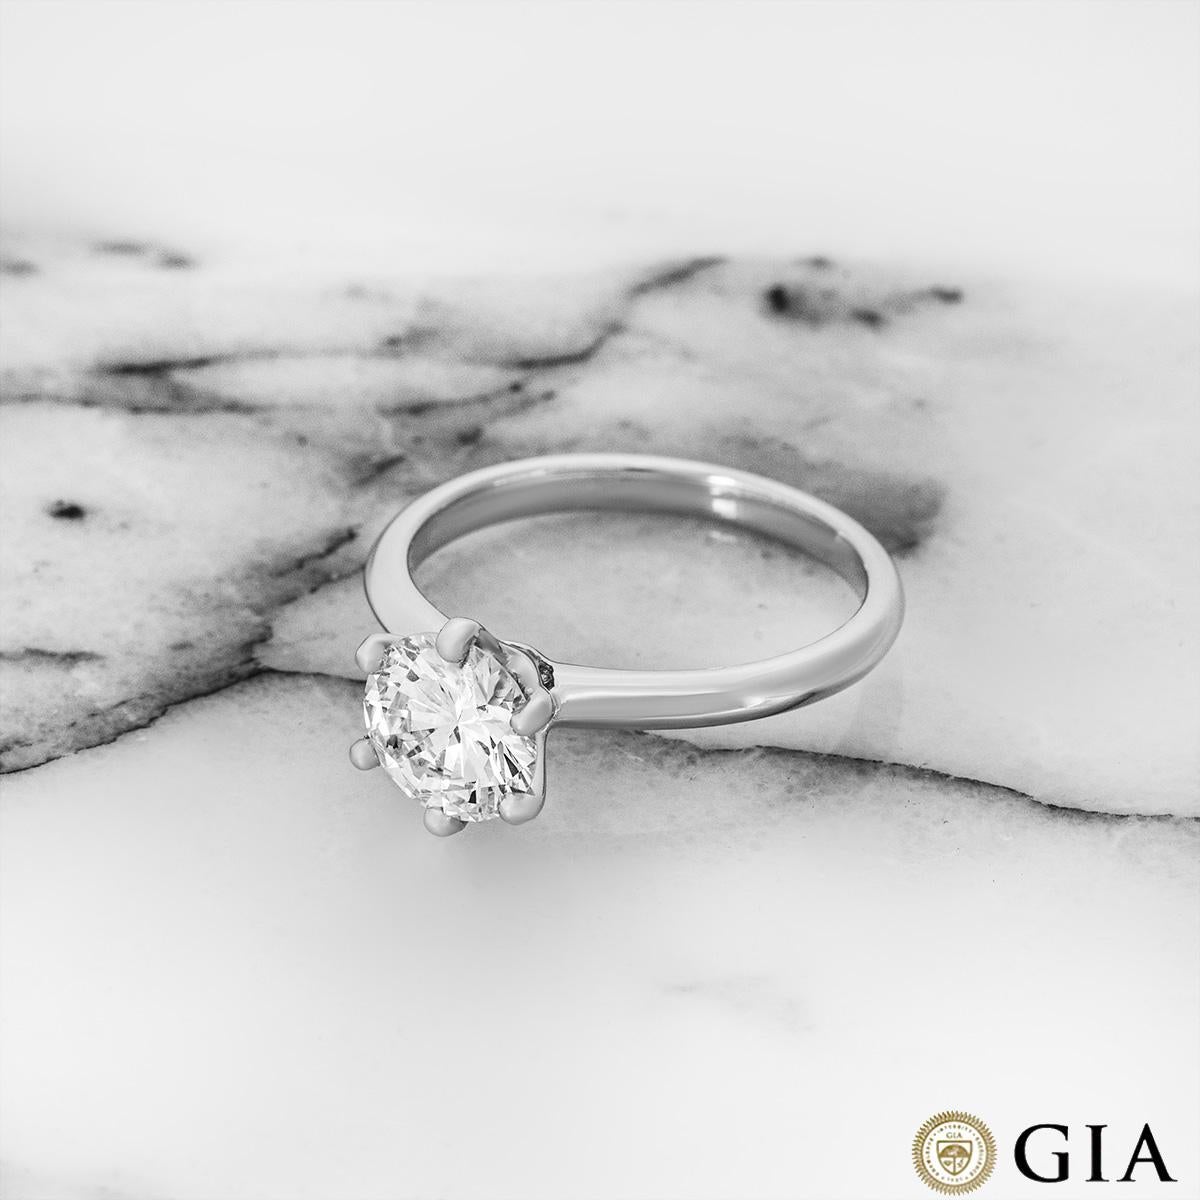 GIA Certified White Gold Round Brilliant Cut Diamond Ring 1.34ct I/VS1 For Sale 2